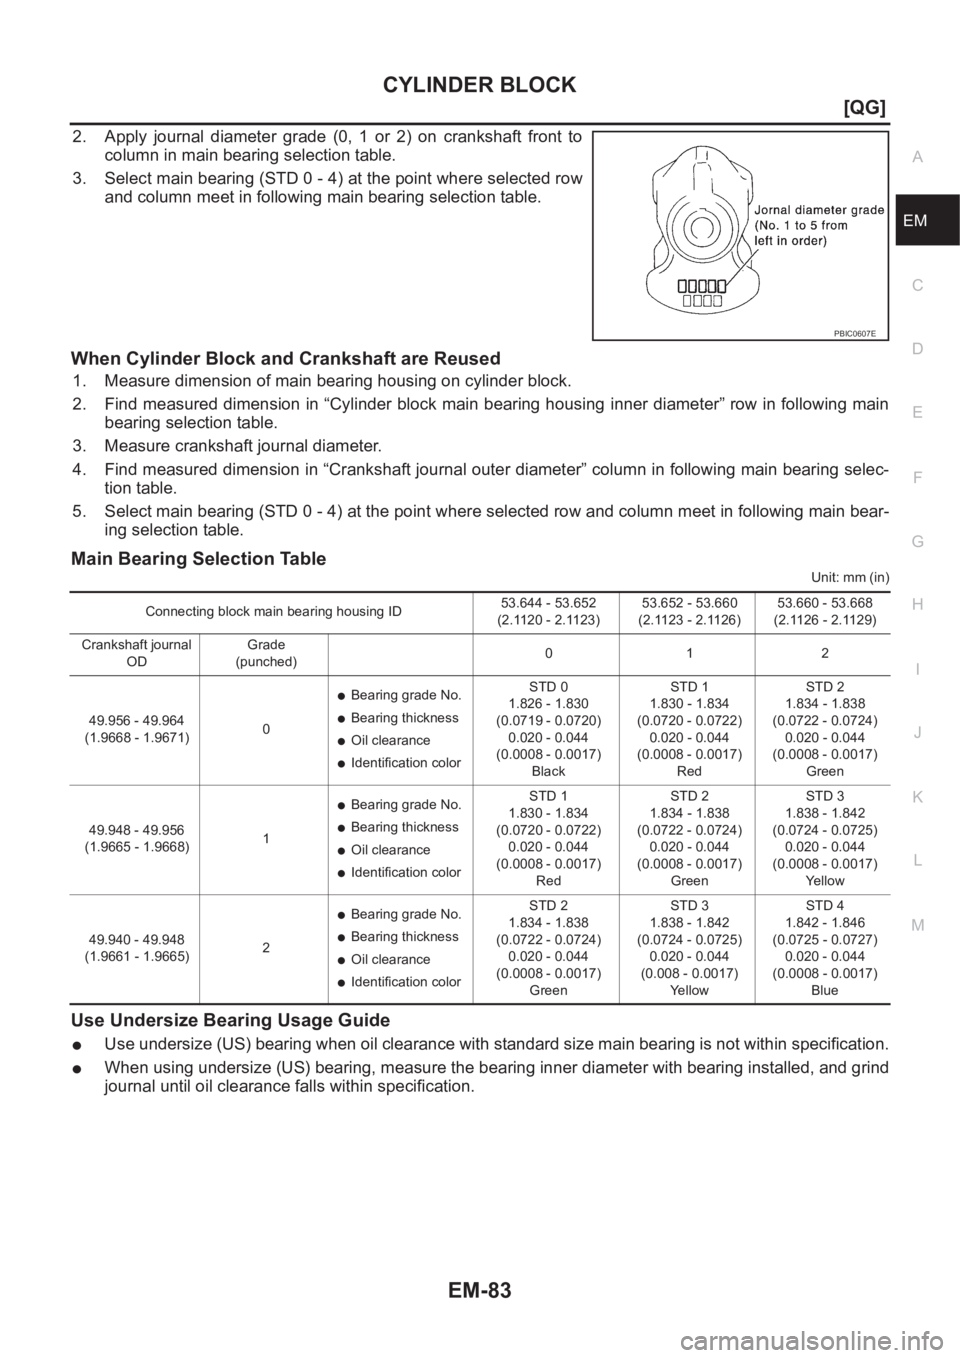 NISSAN ALMERA N16 2003  Electronic Repair Manual CYLINDER BLOCK
EM-83
[QG]
C
D
E
F
G
H
I
J
K
L
MA
EM
2. Apply  journal  diameter  grade  (0,  1  or  2)  on  crankshaft  front to
column in main bearing selection table.
3. Select main bearing (STD 0 -